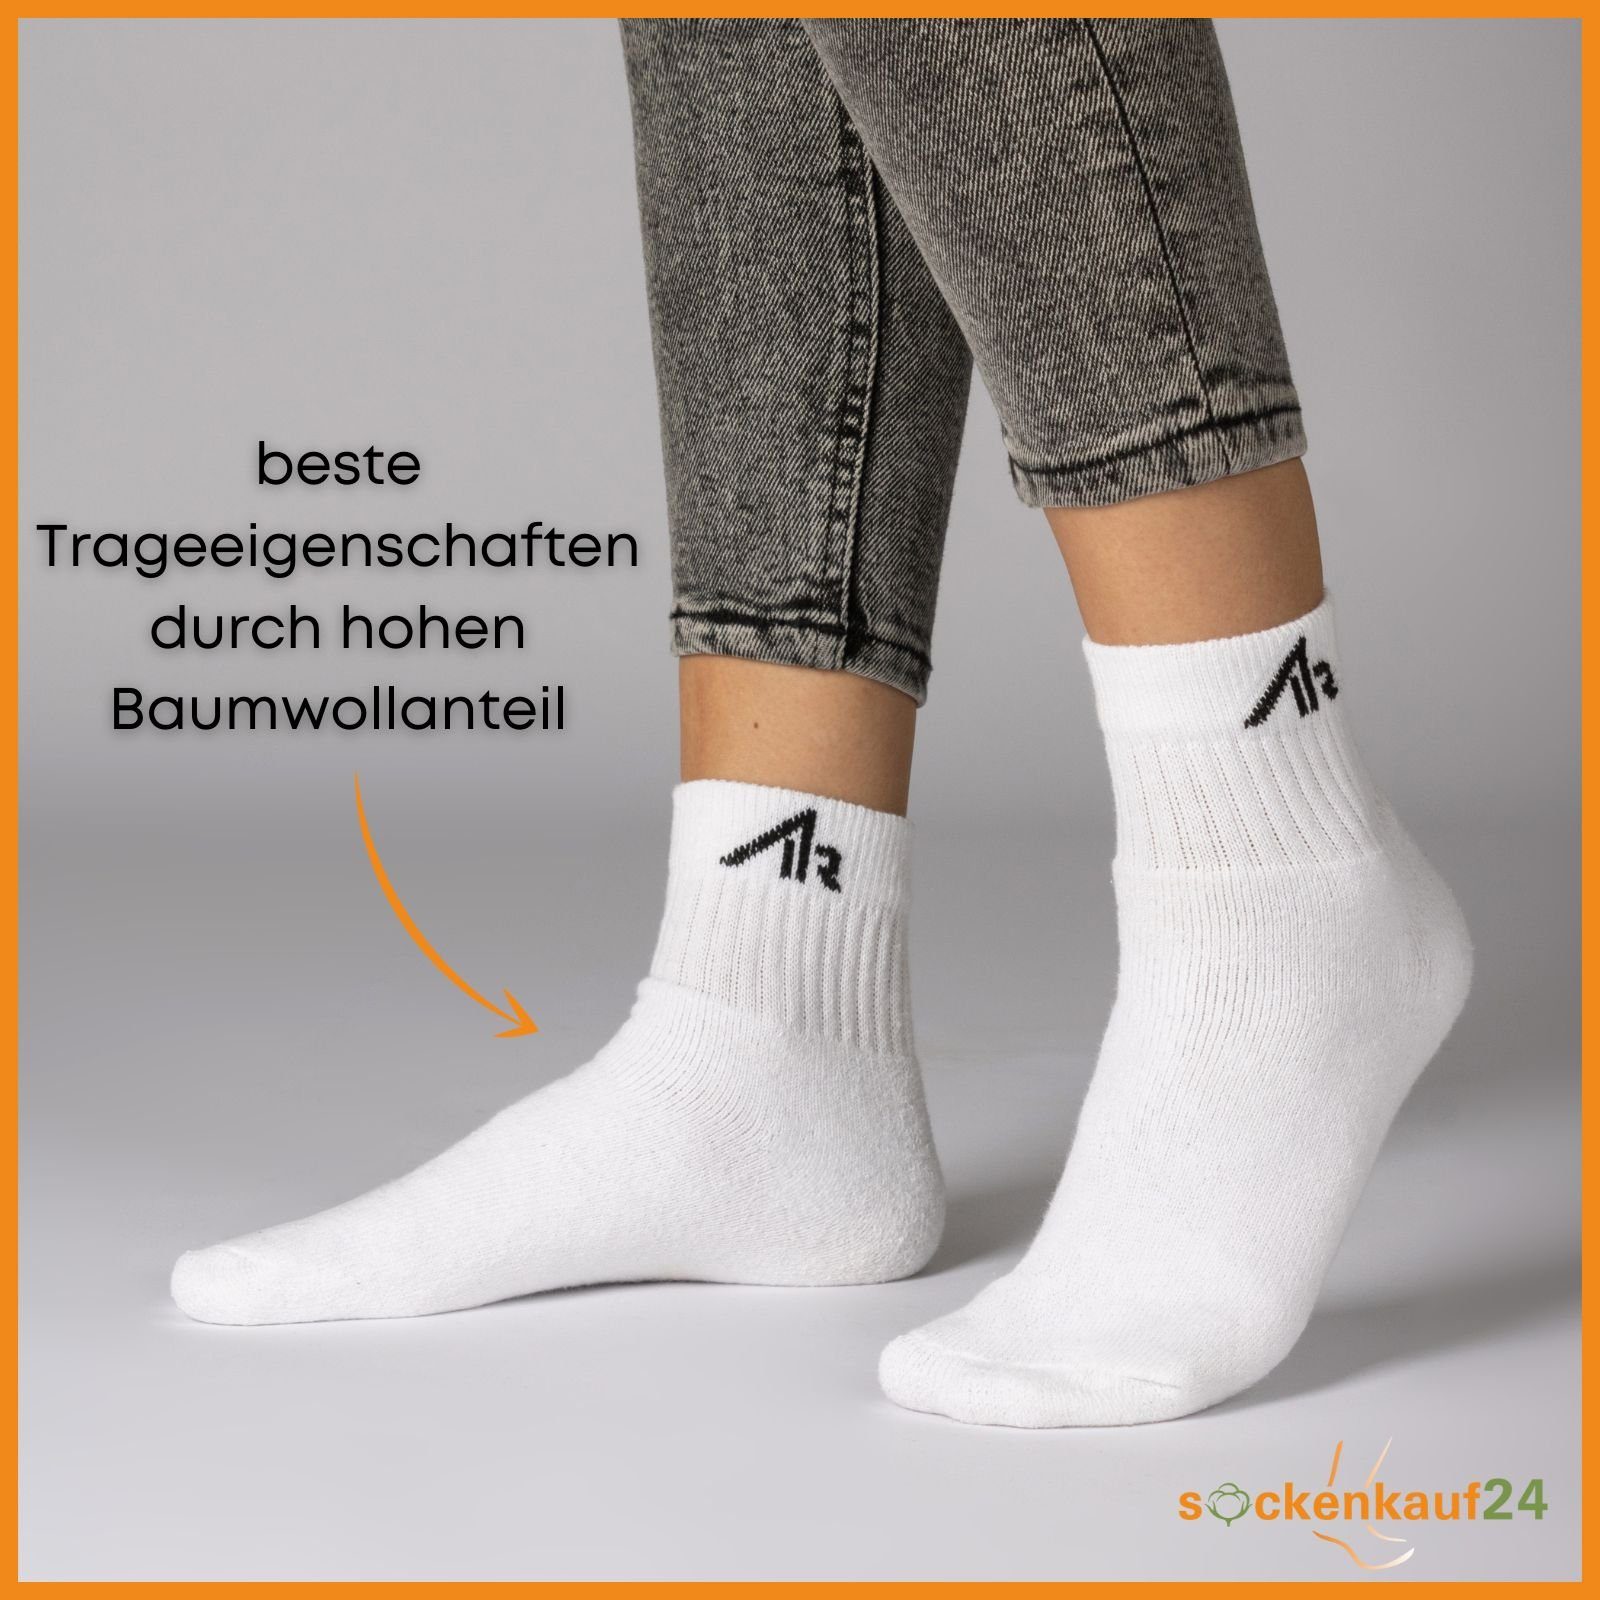 (Schwarz, Damen - "i1R" Sportsocken Sport Baumwolle 10301 Herren 43-46) sockenkauf24 Paar Socken 10 Tennissocken Kurzsocken